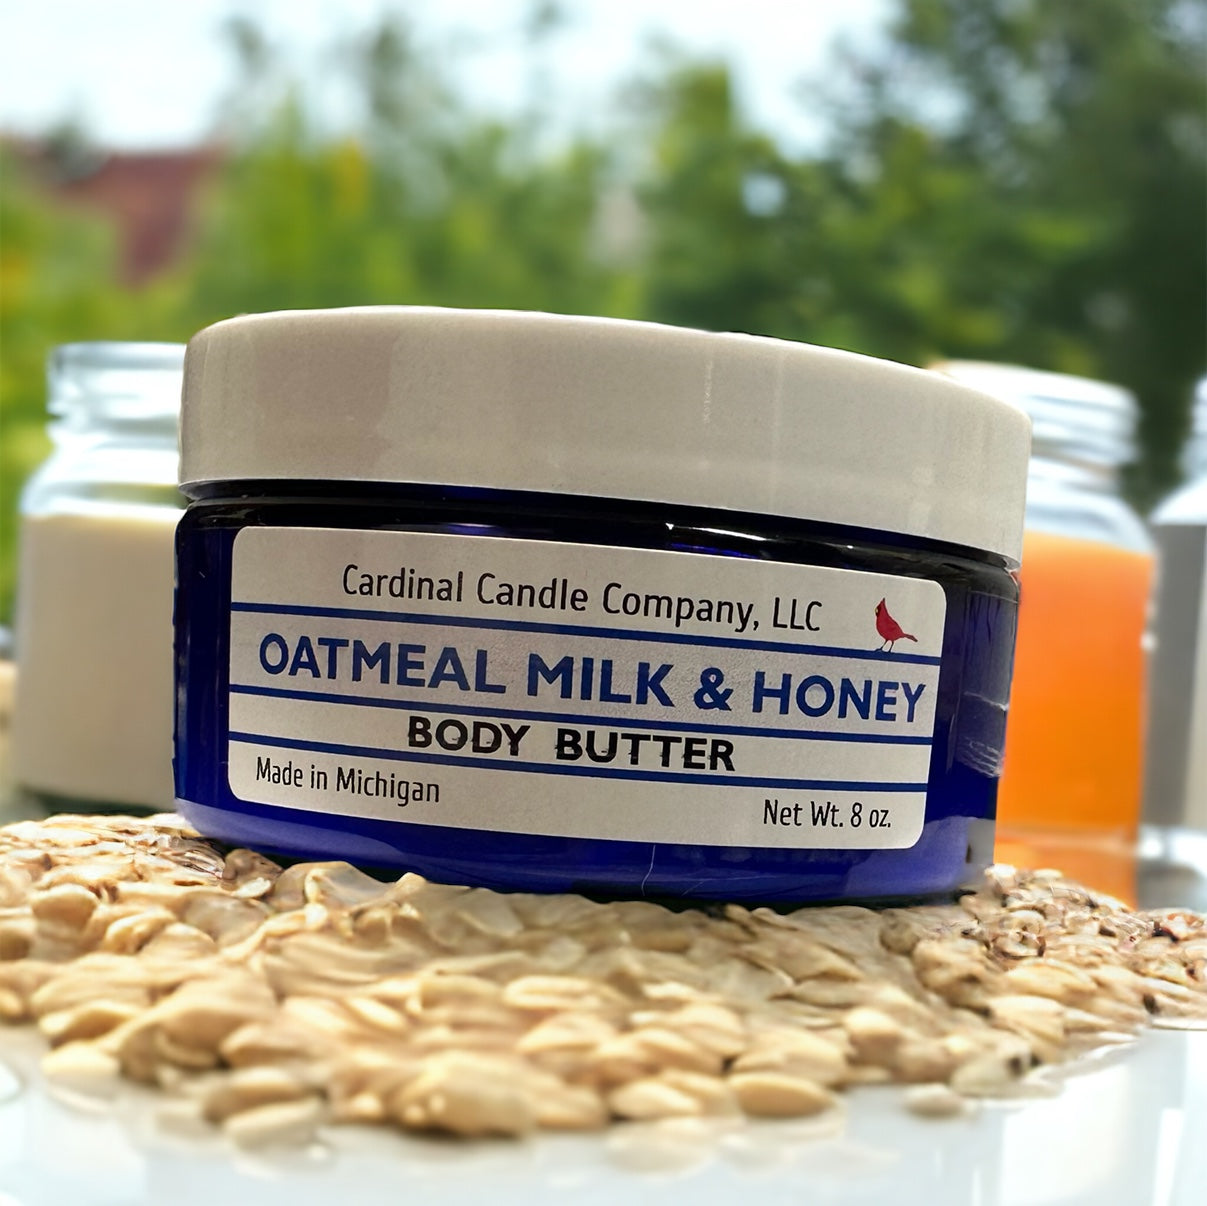 Oatmeal Milk & Honey Body Butter